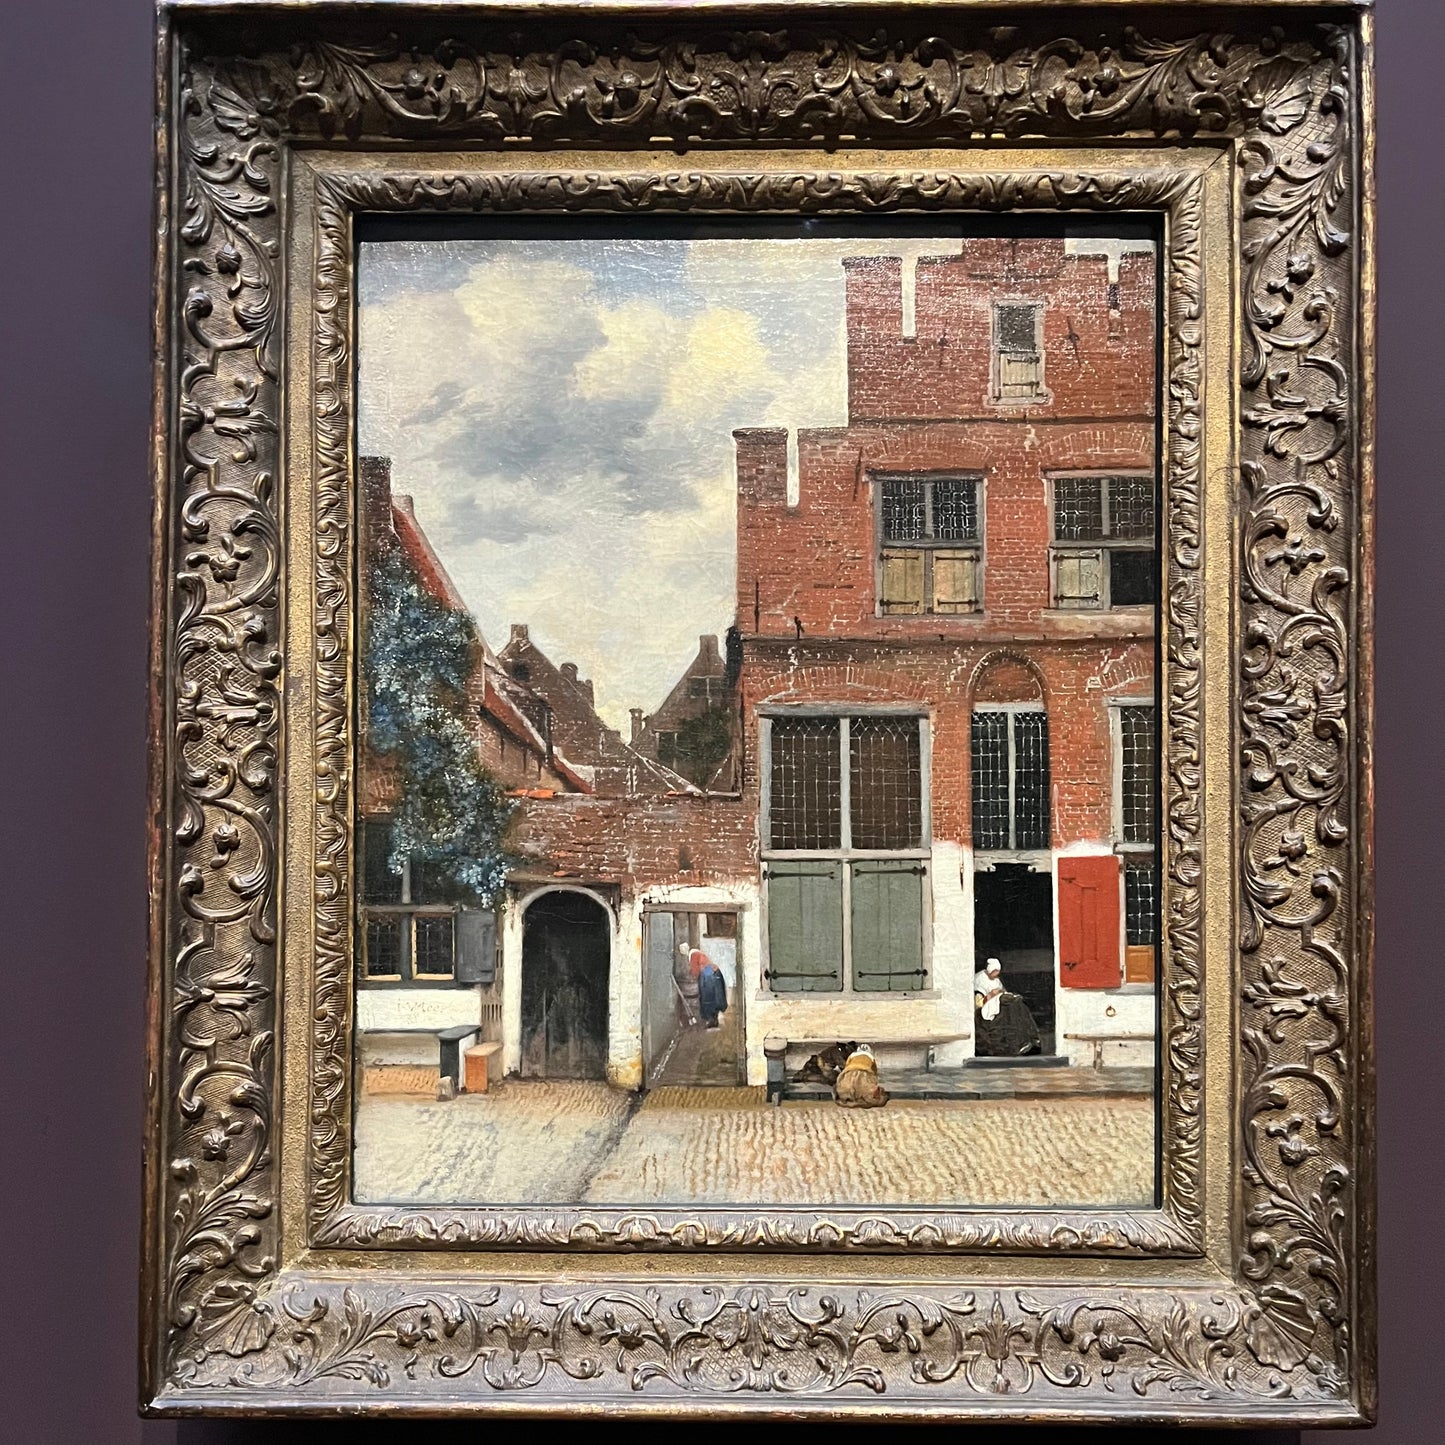 Little Street - Vermeer 1657-58